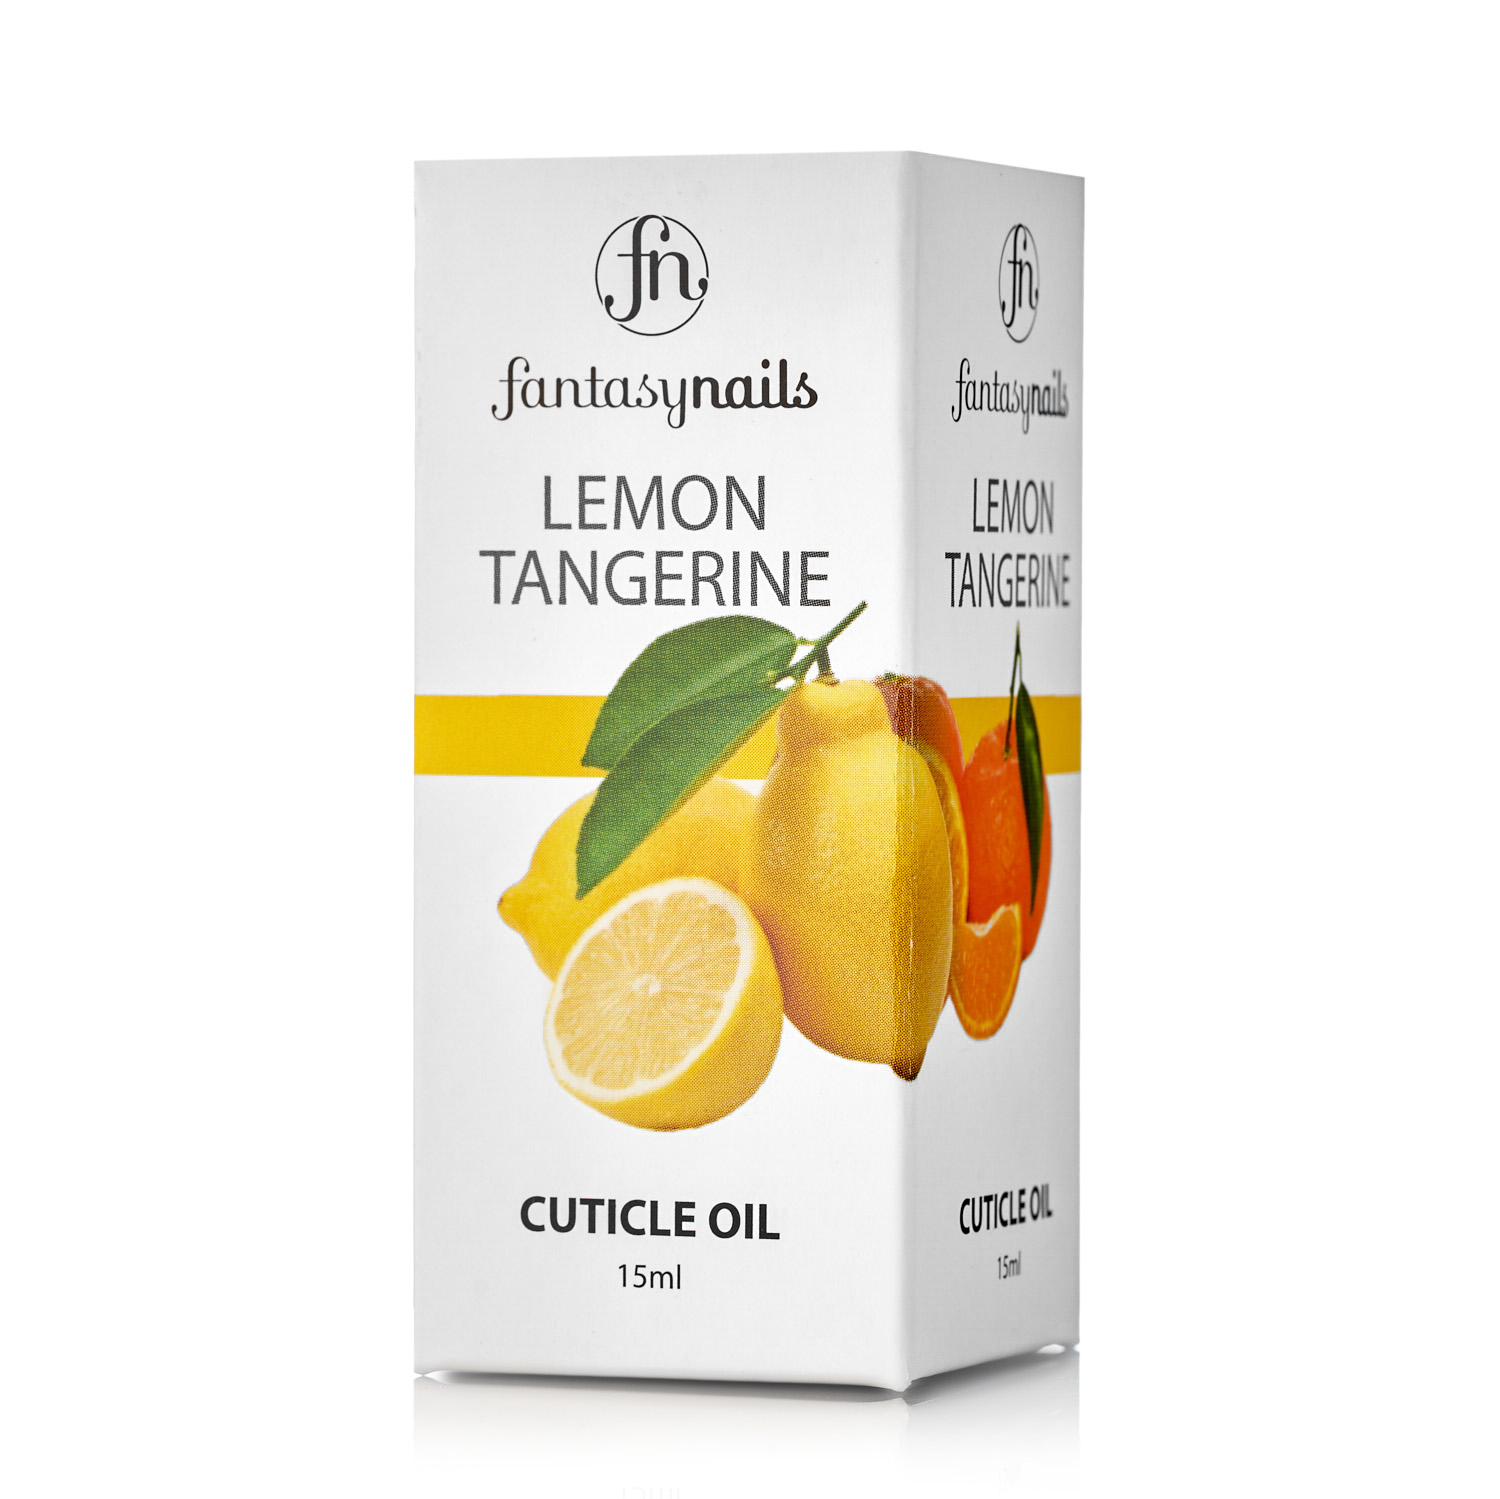 Масло для кутикулы Lemon/Tangerine («Лимон/Танжерин») 15 ml из каталога Препараты для ногтей в интернет-магазине BPW.style